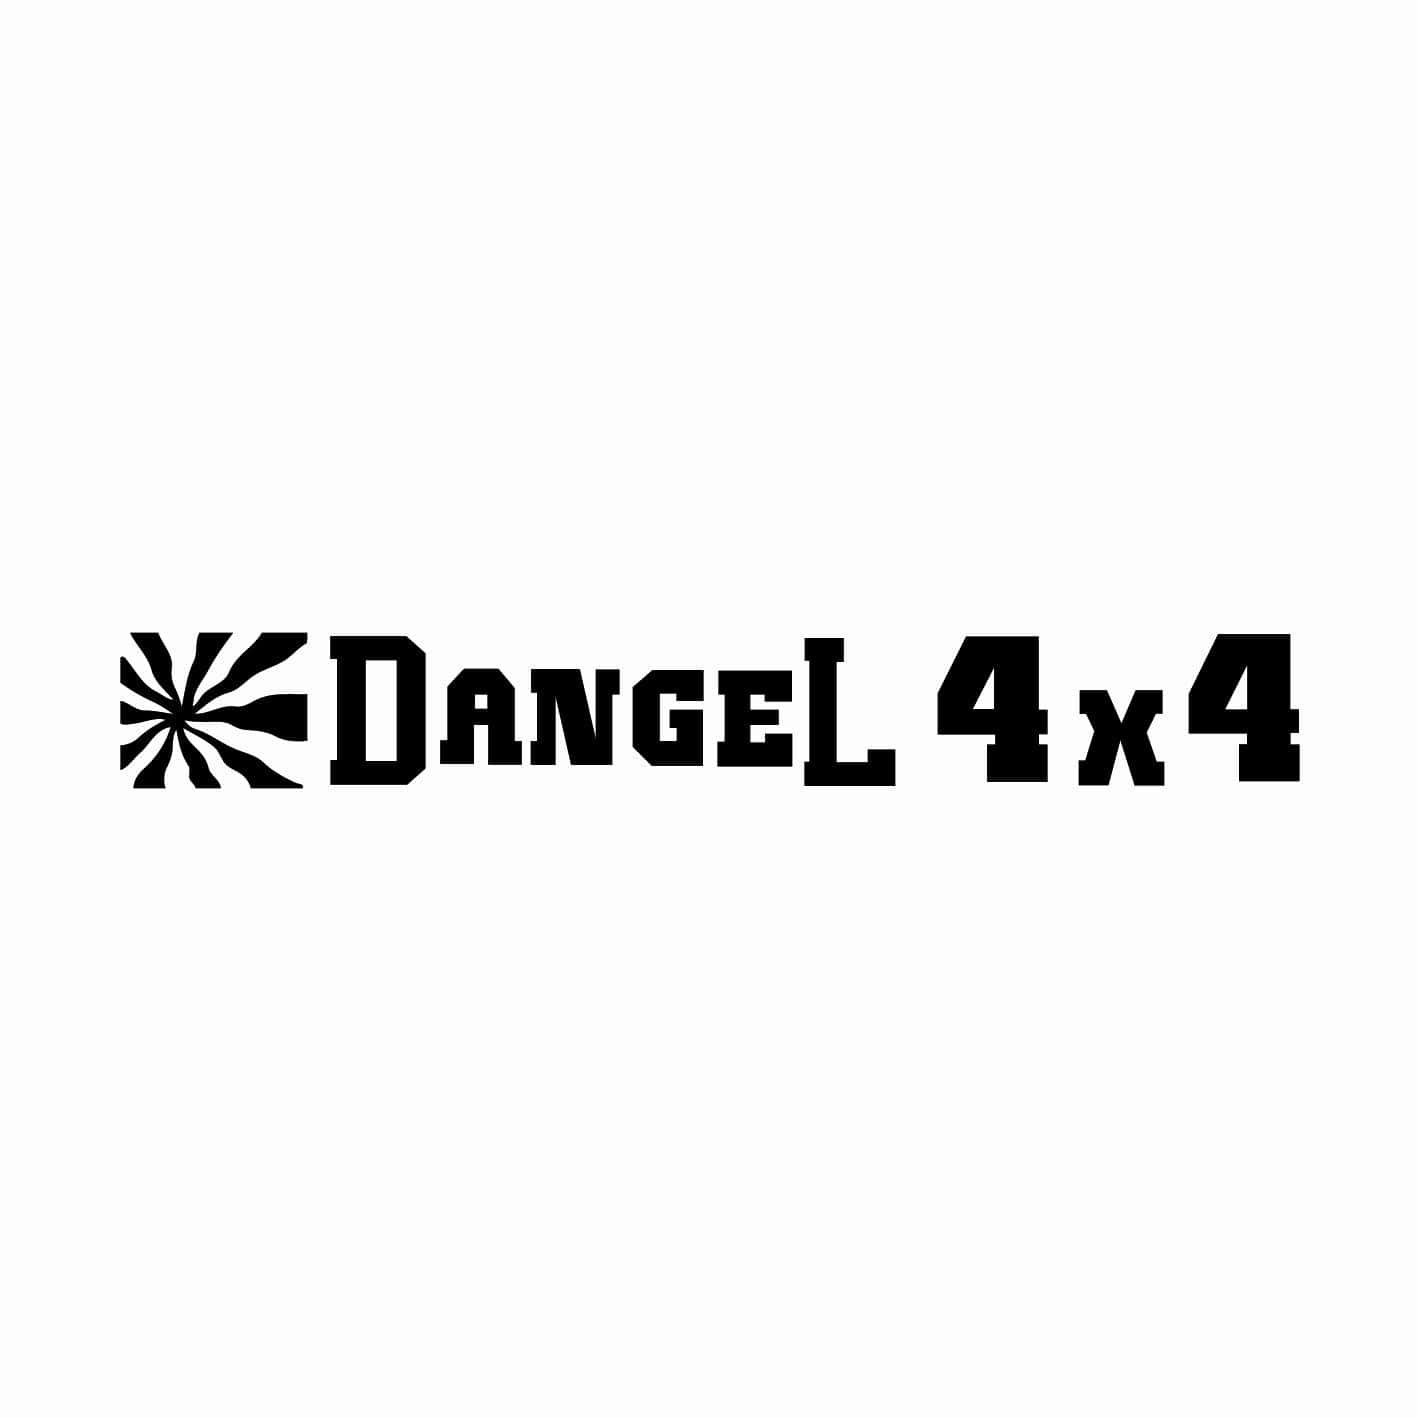 dangel-ref3-stickers-sticker-autocollant-4x4-tuning-audio-4x4-tout-terrain-car-auto-moto-camion-competition-deco-rallye-racing-min